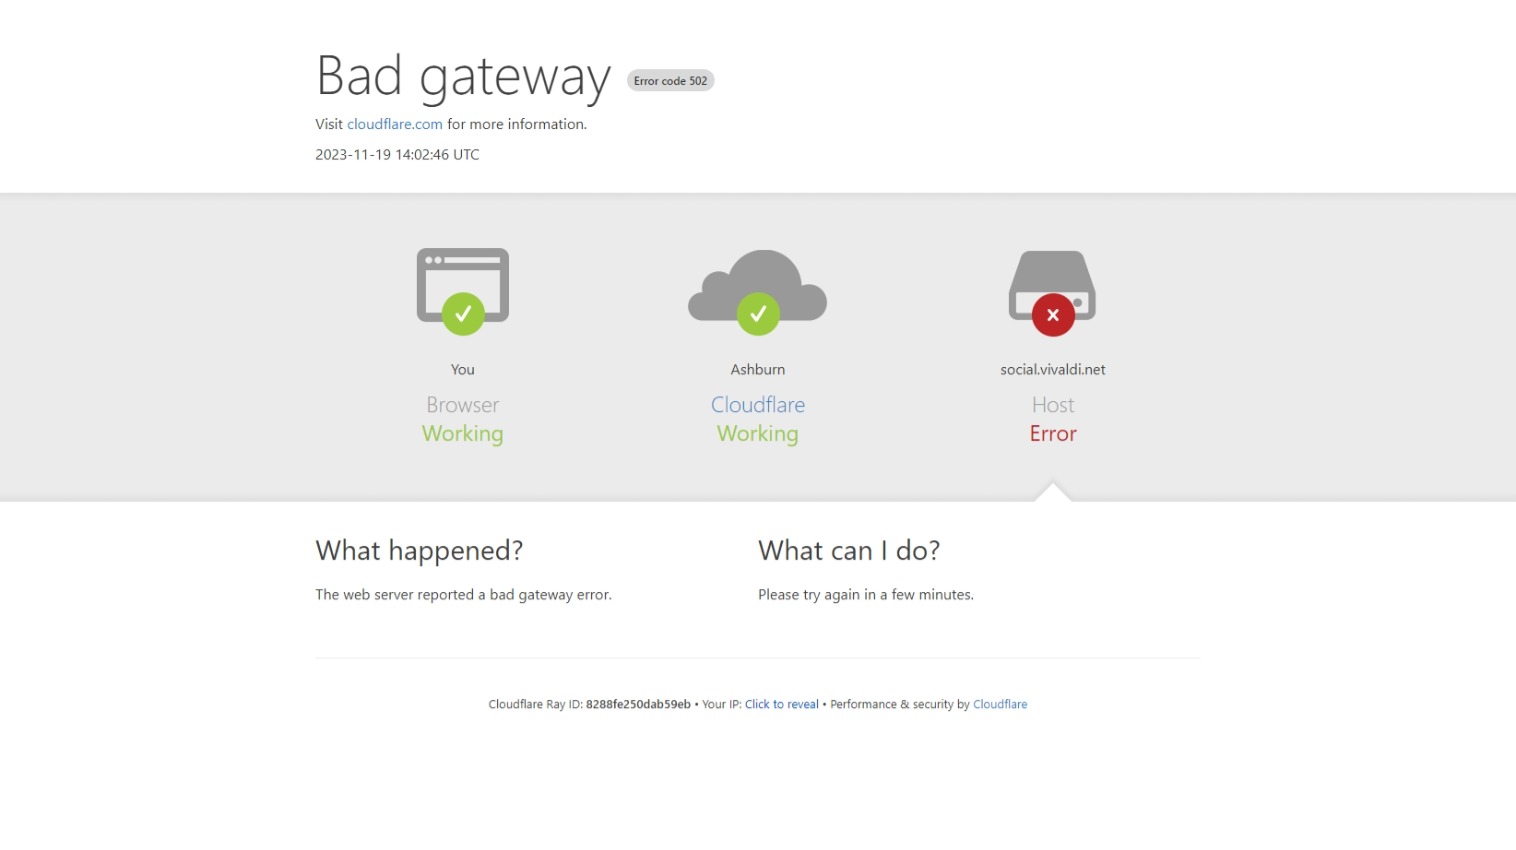 cloudflare bad gateway error screenshot showing social.vivaldi.net's current offline status